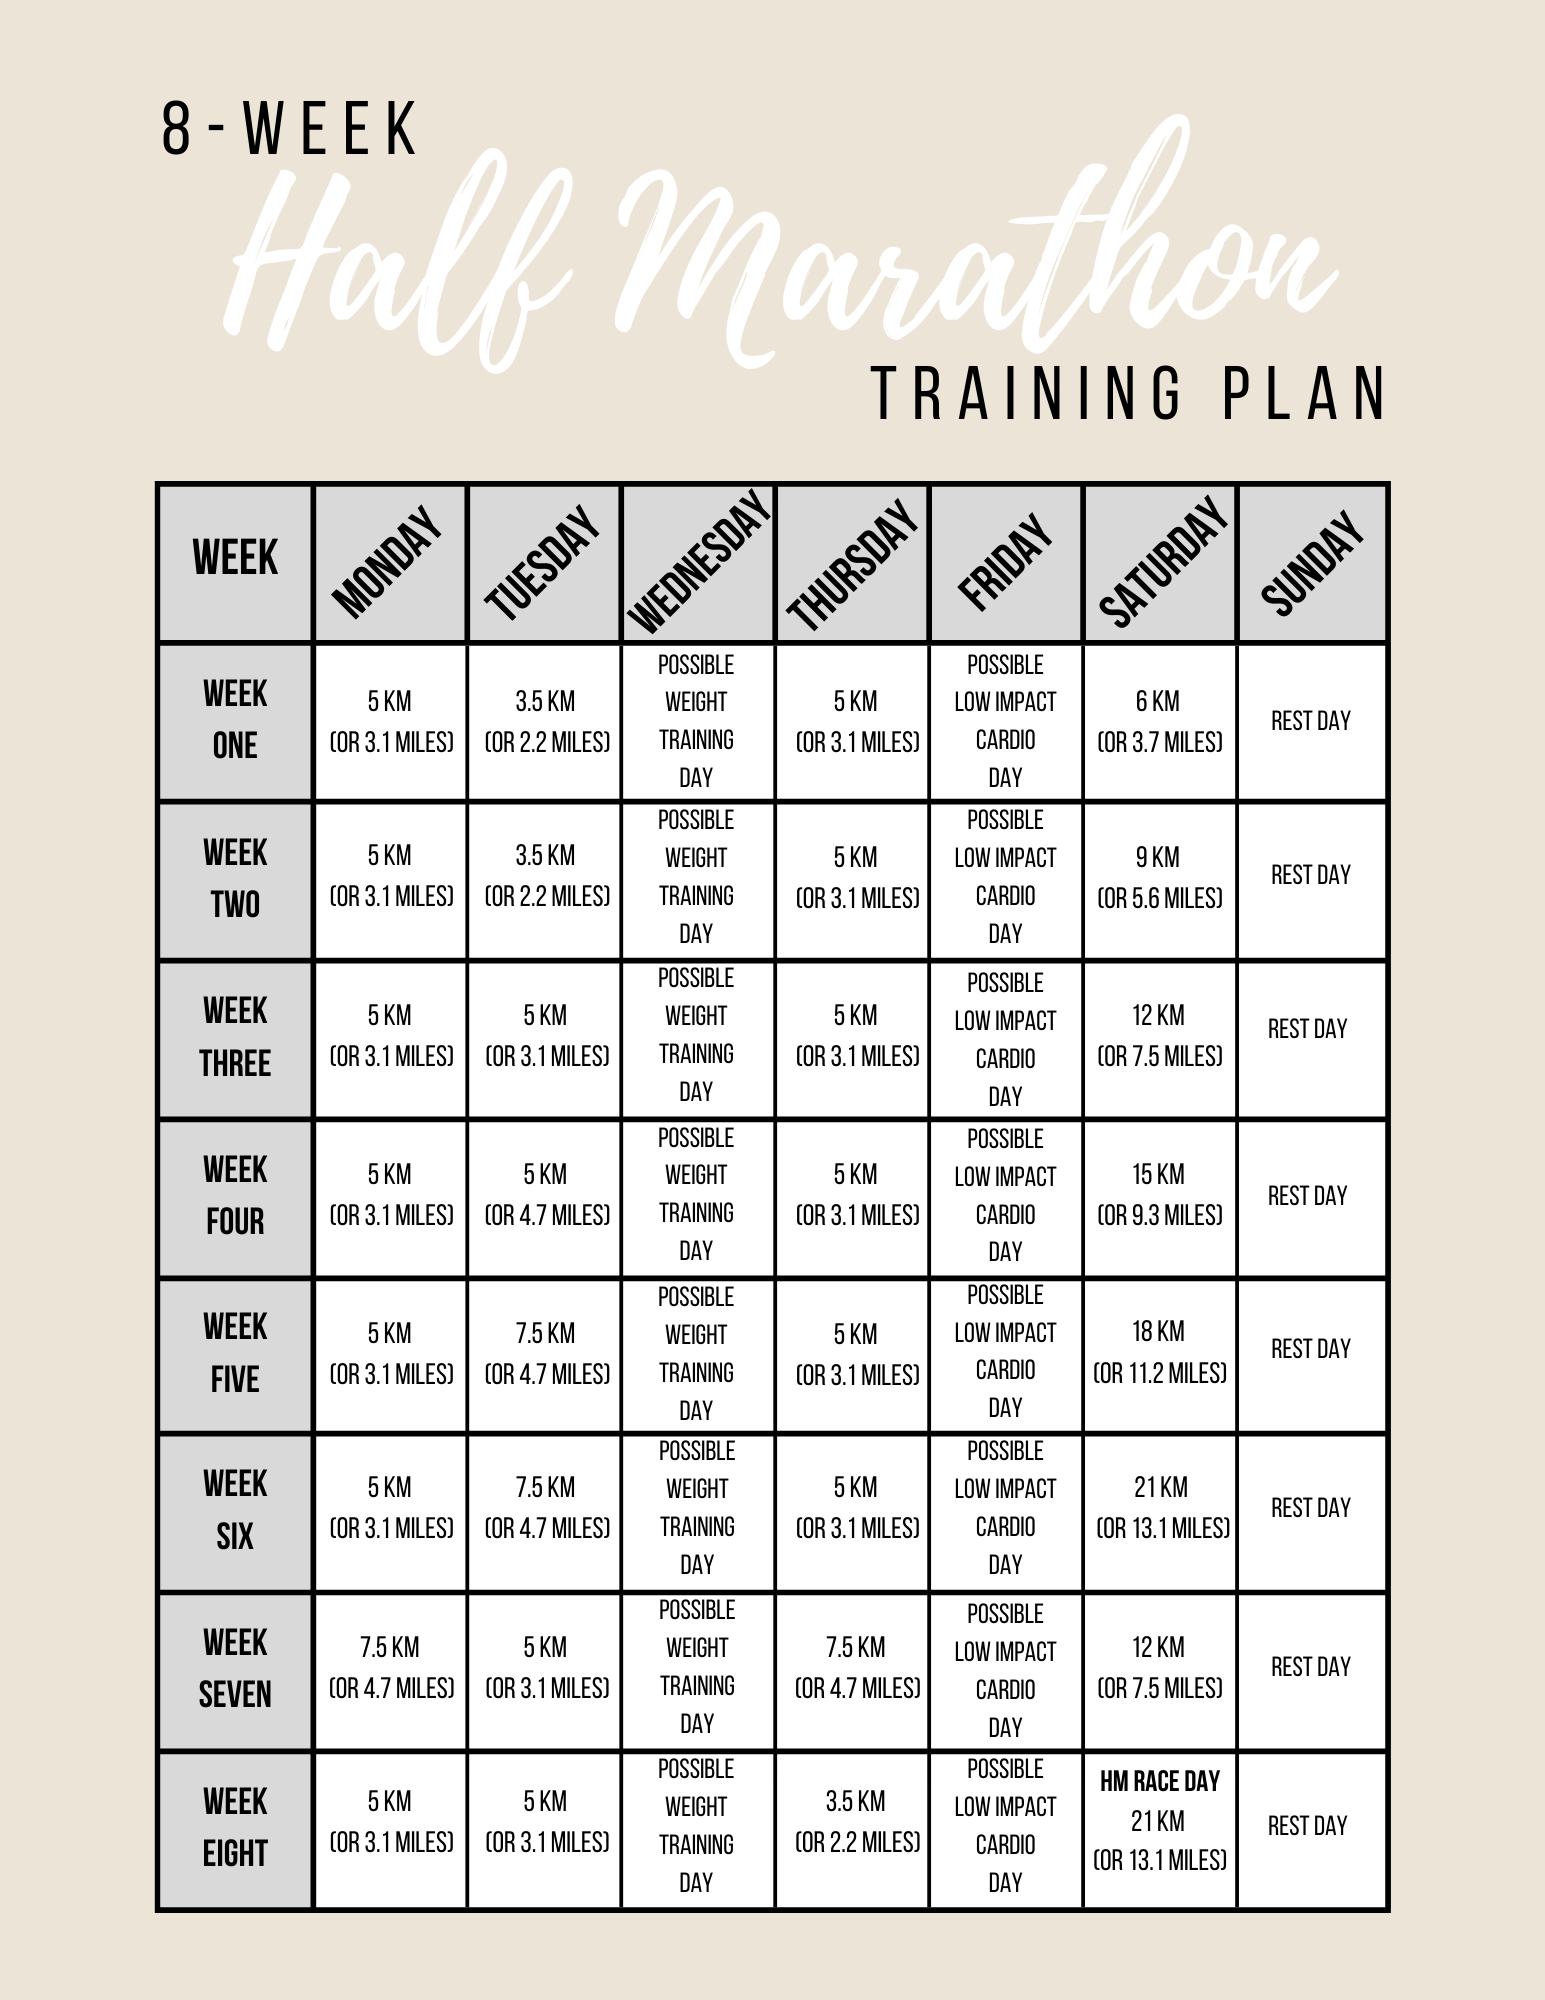 8 week Half Marathon Training Plan